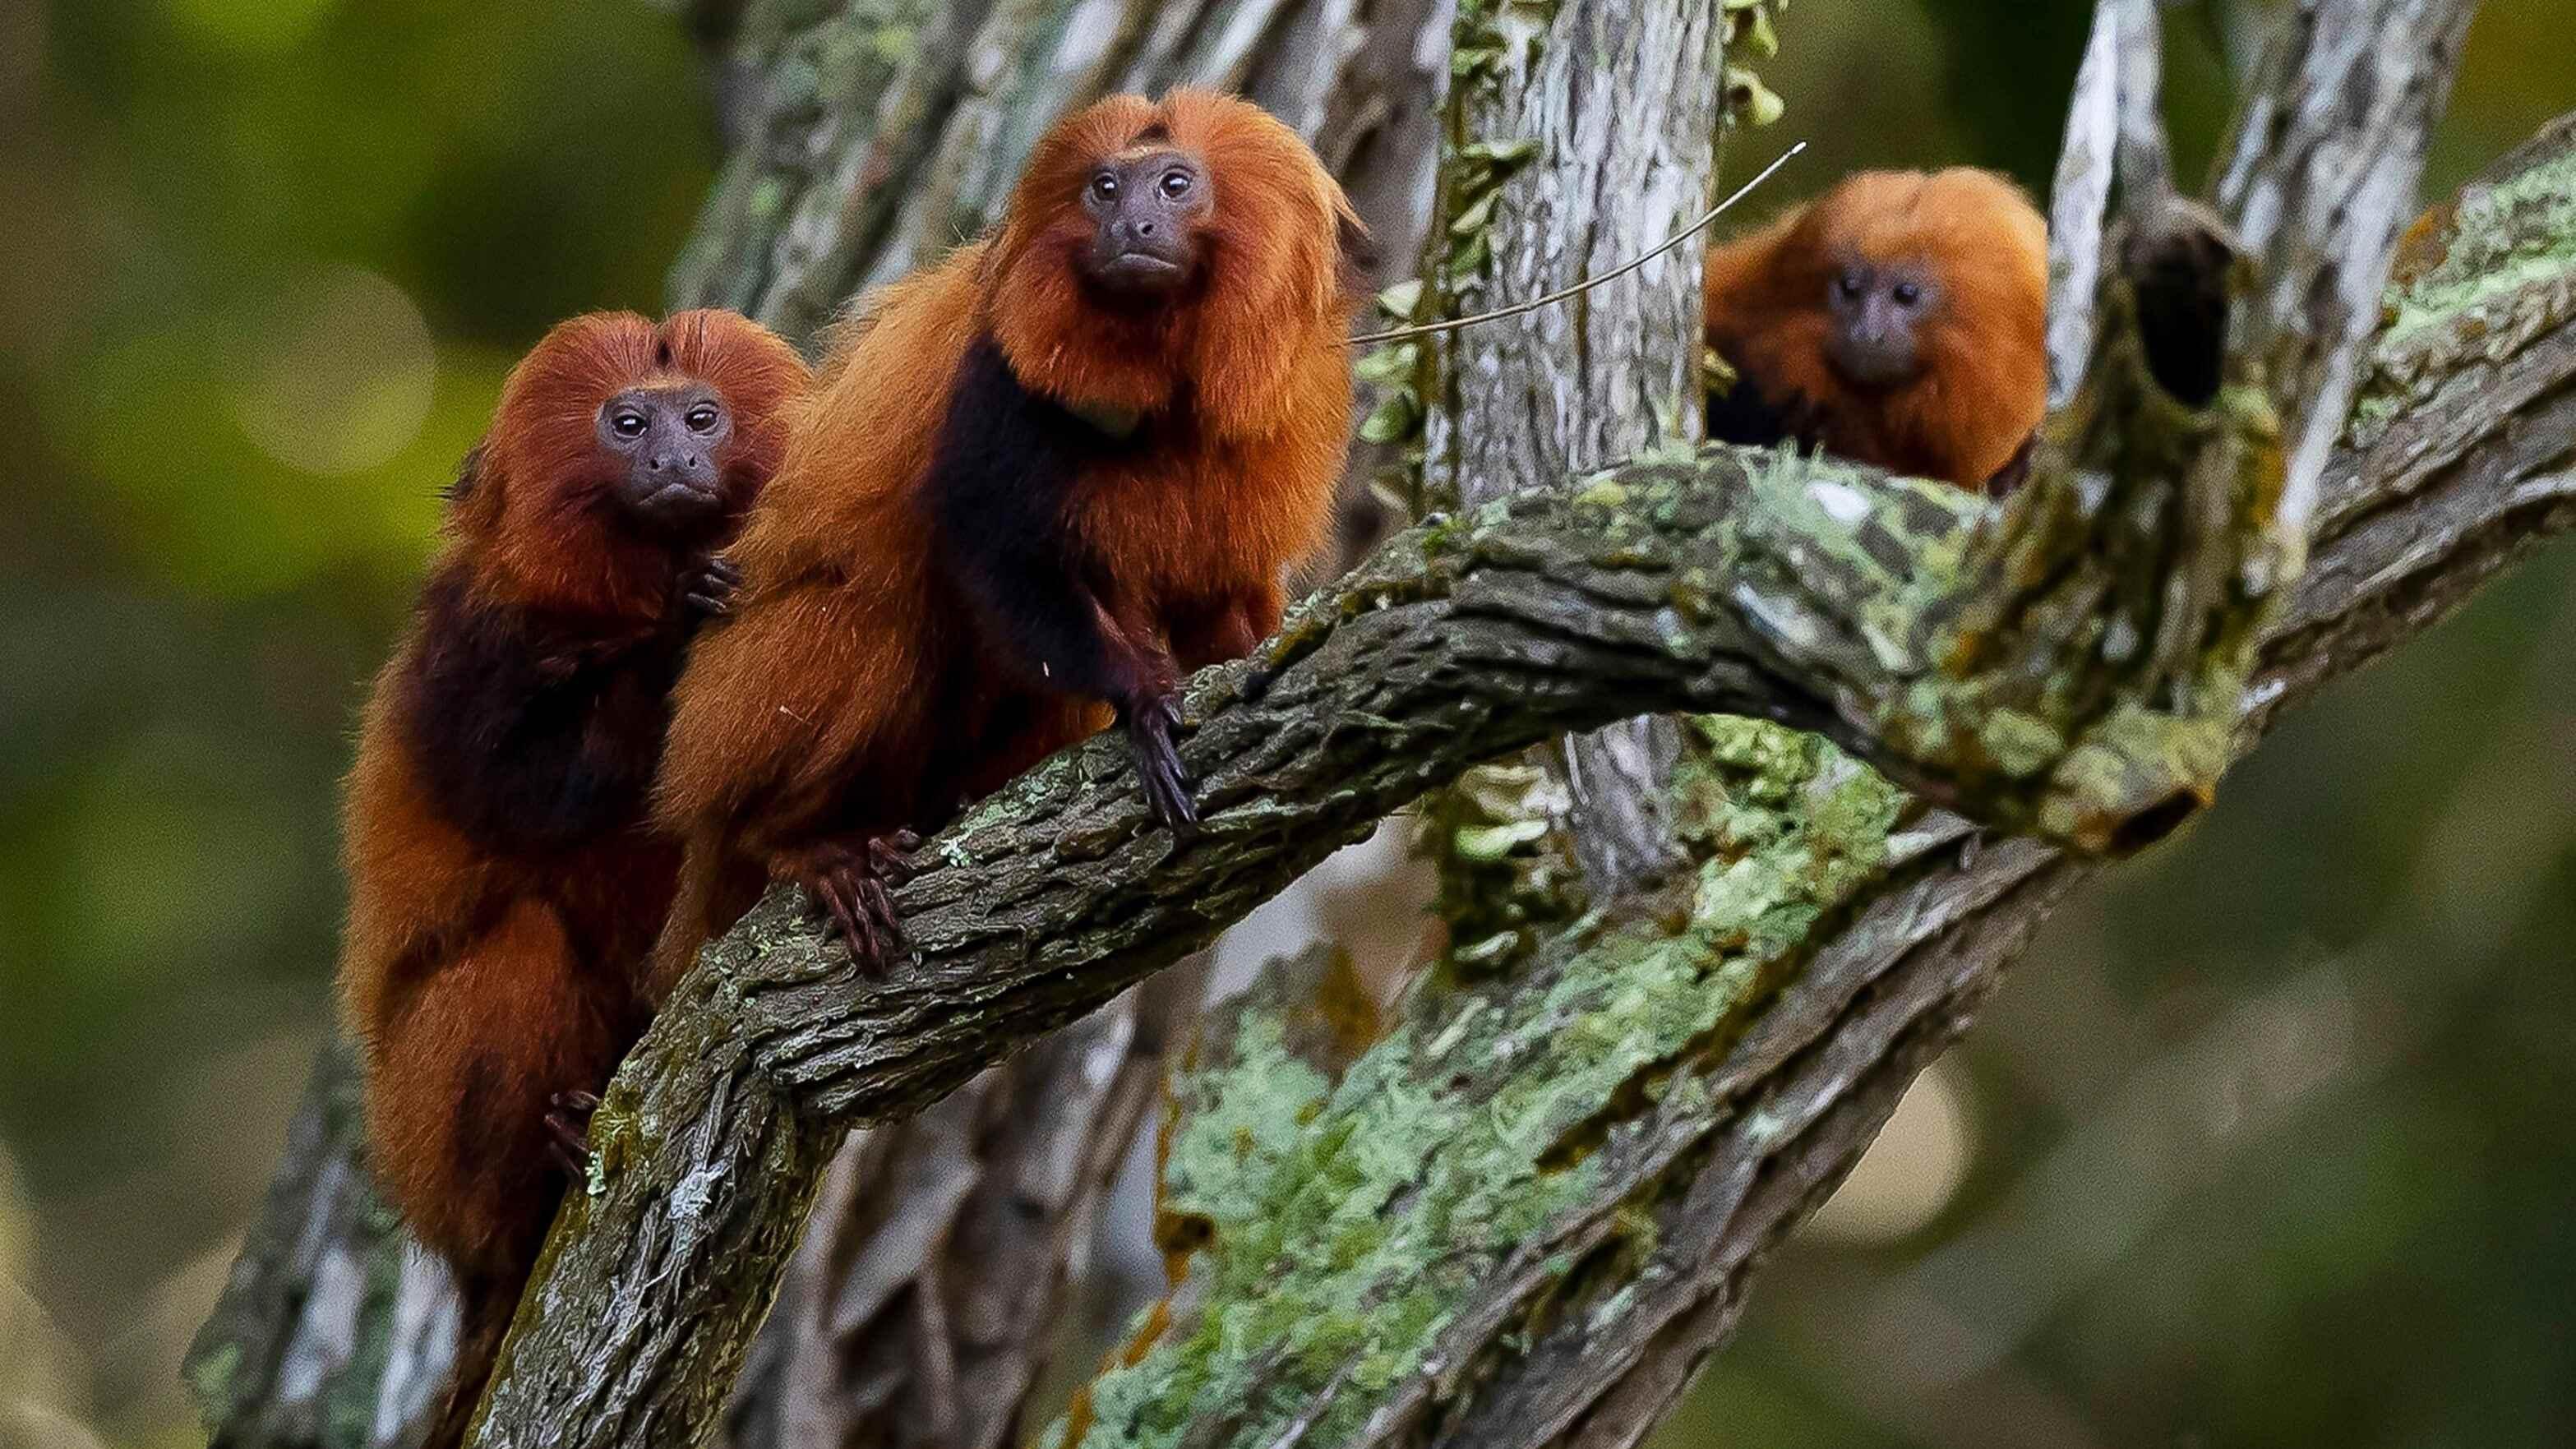 Saving Brazil's golden monkey, one green corridor at a time